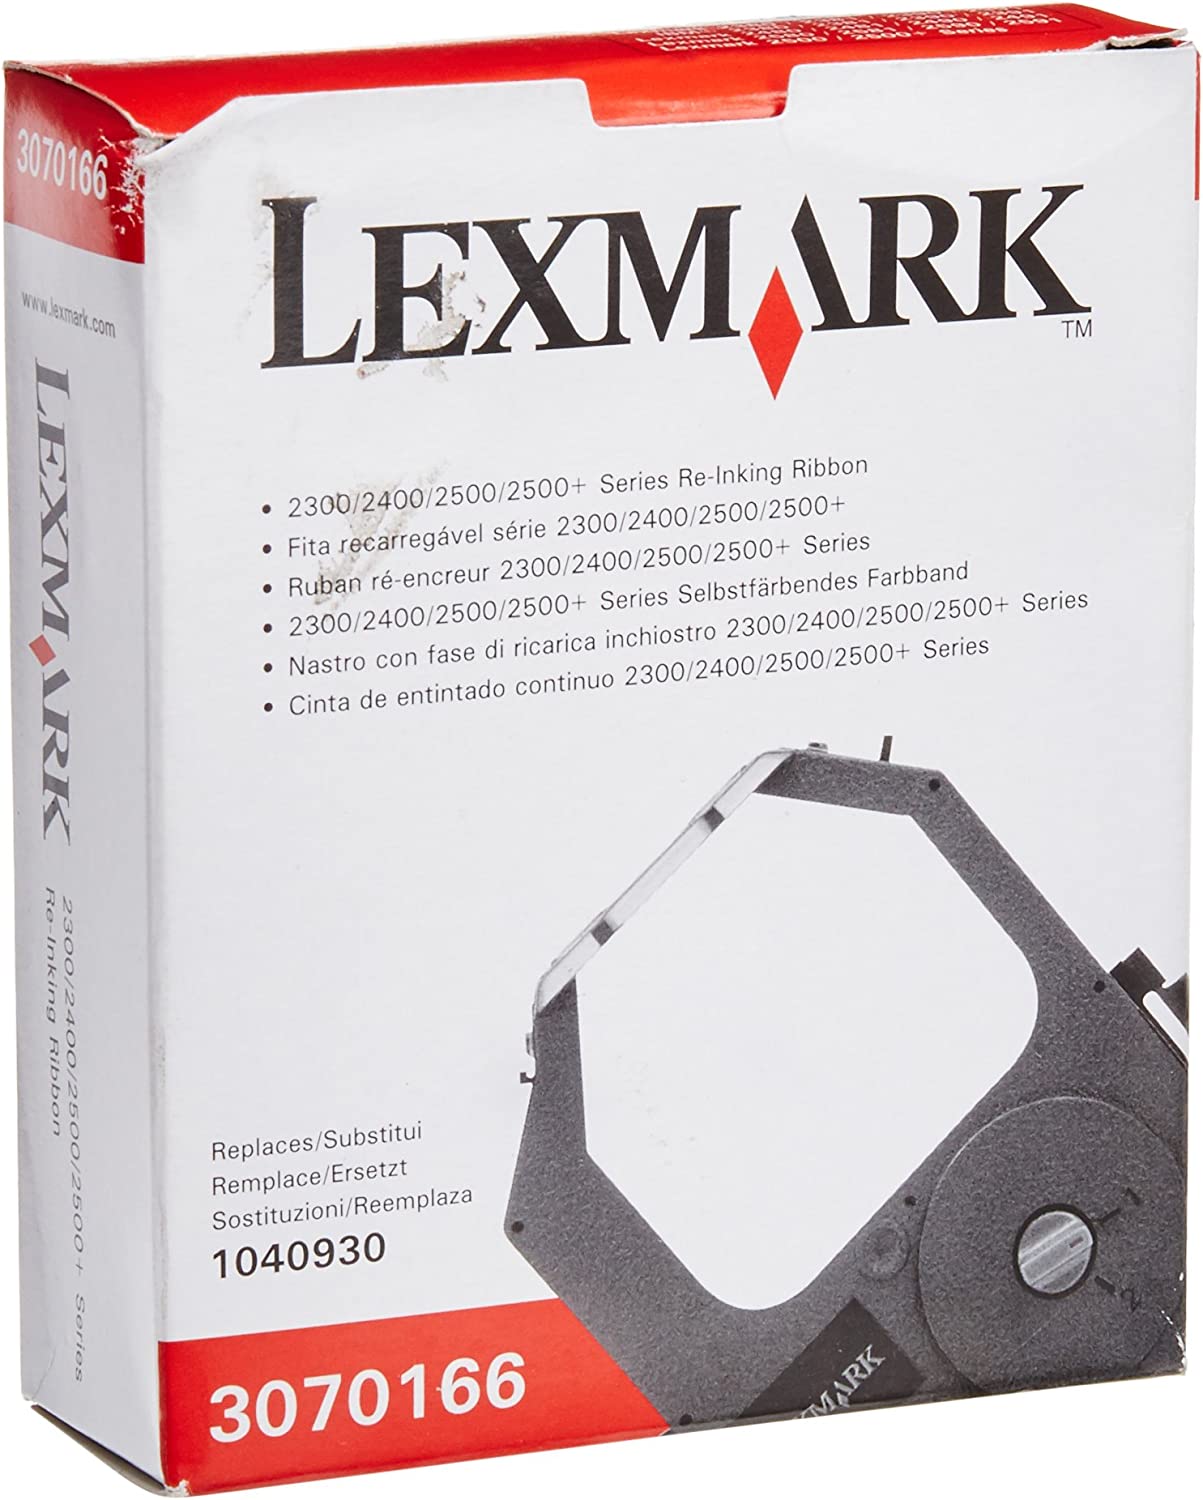 Cinta Lexmark Ibm 238X 239X Reinker 4000000 Caracteres - 3070166 FullOffice.com